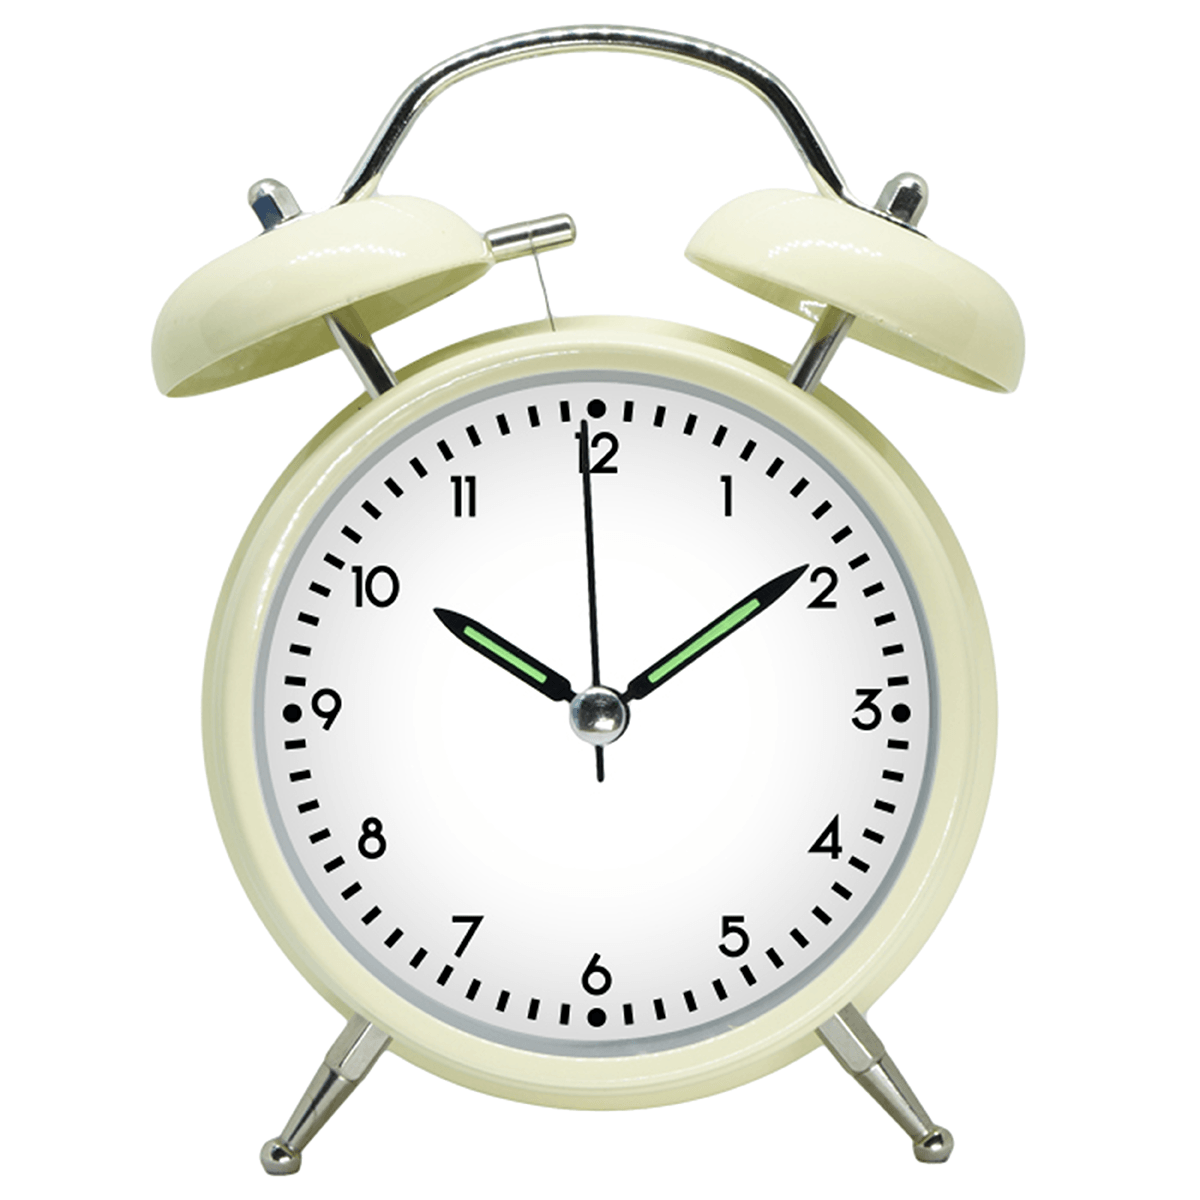 Alarm Clocks - alarm_clock png download - 1200*1200 - Free Transparent ...